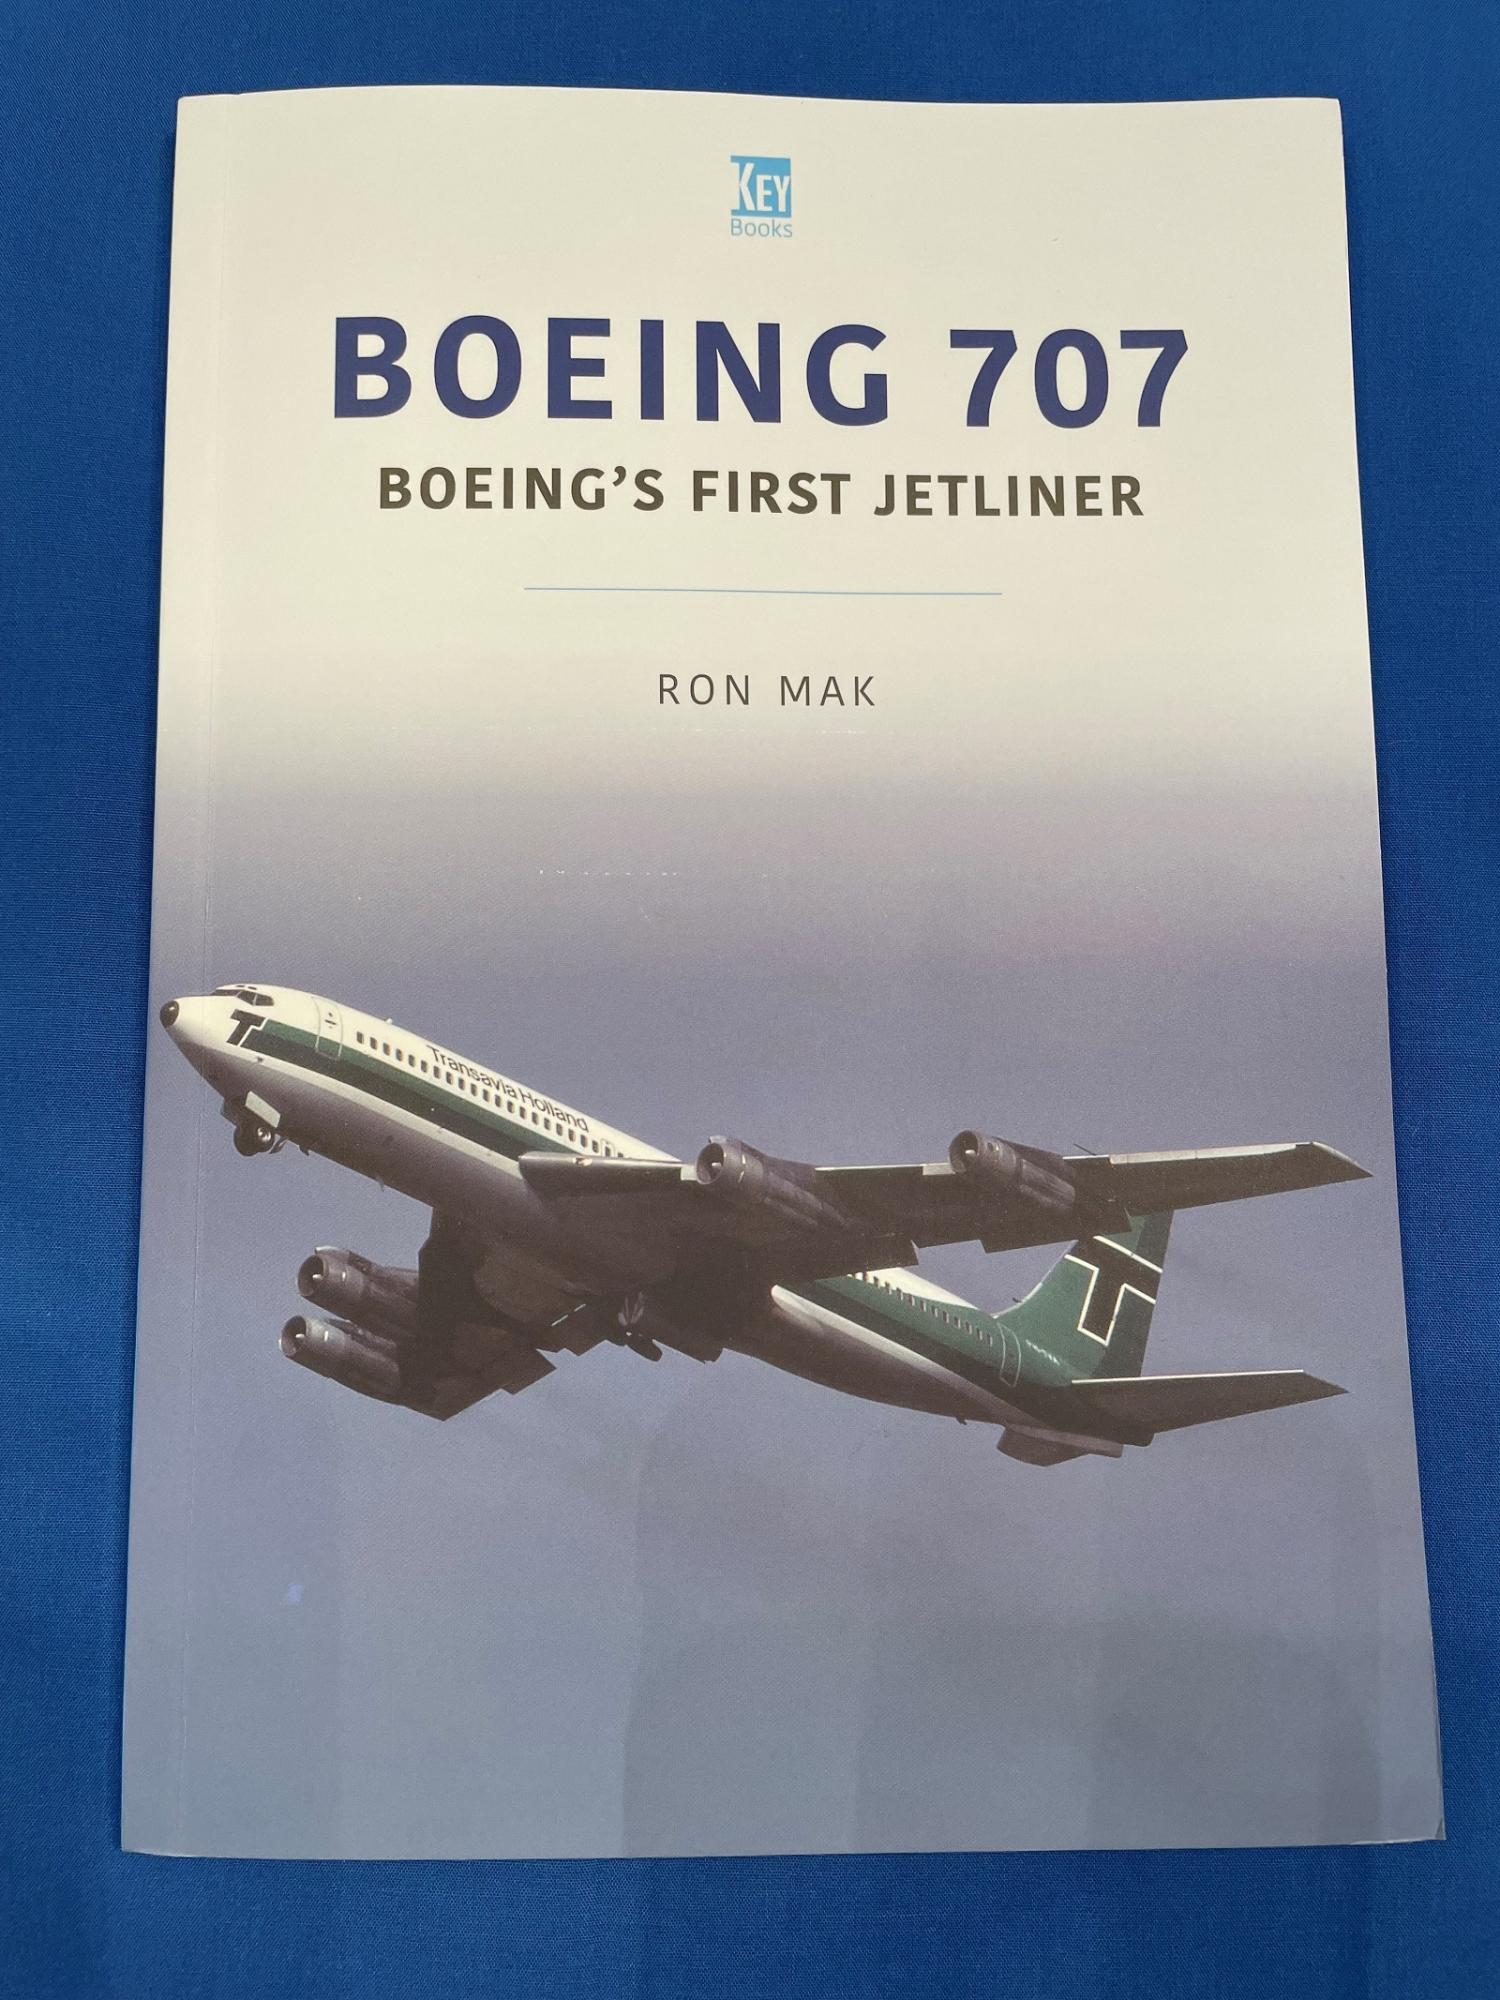 The Boeing 707 Jetliner in Civilian Service - Owlcation